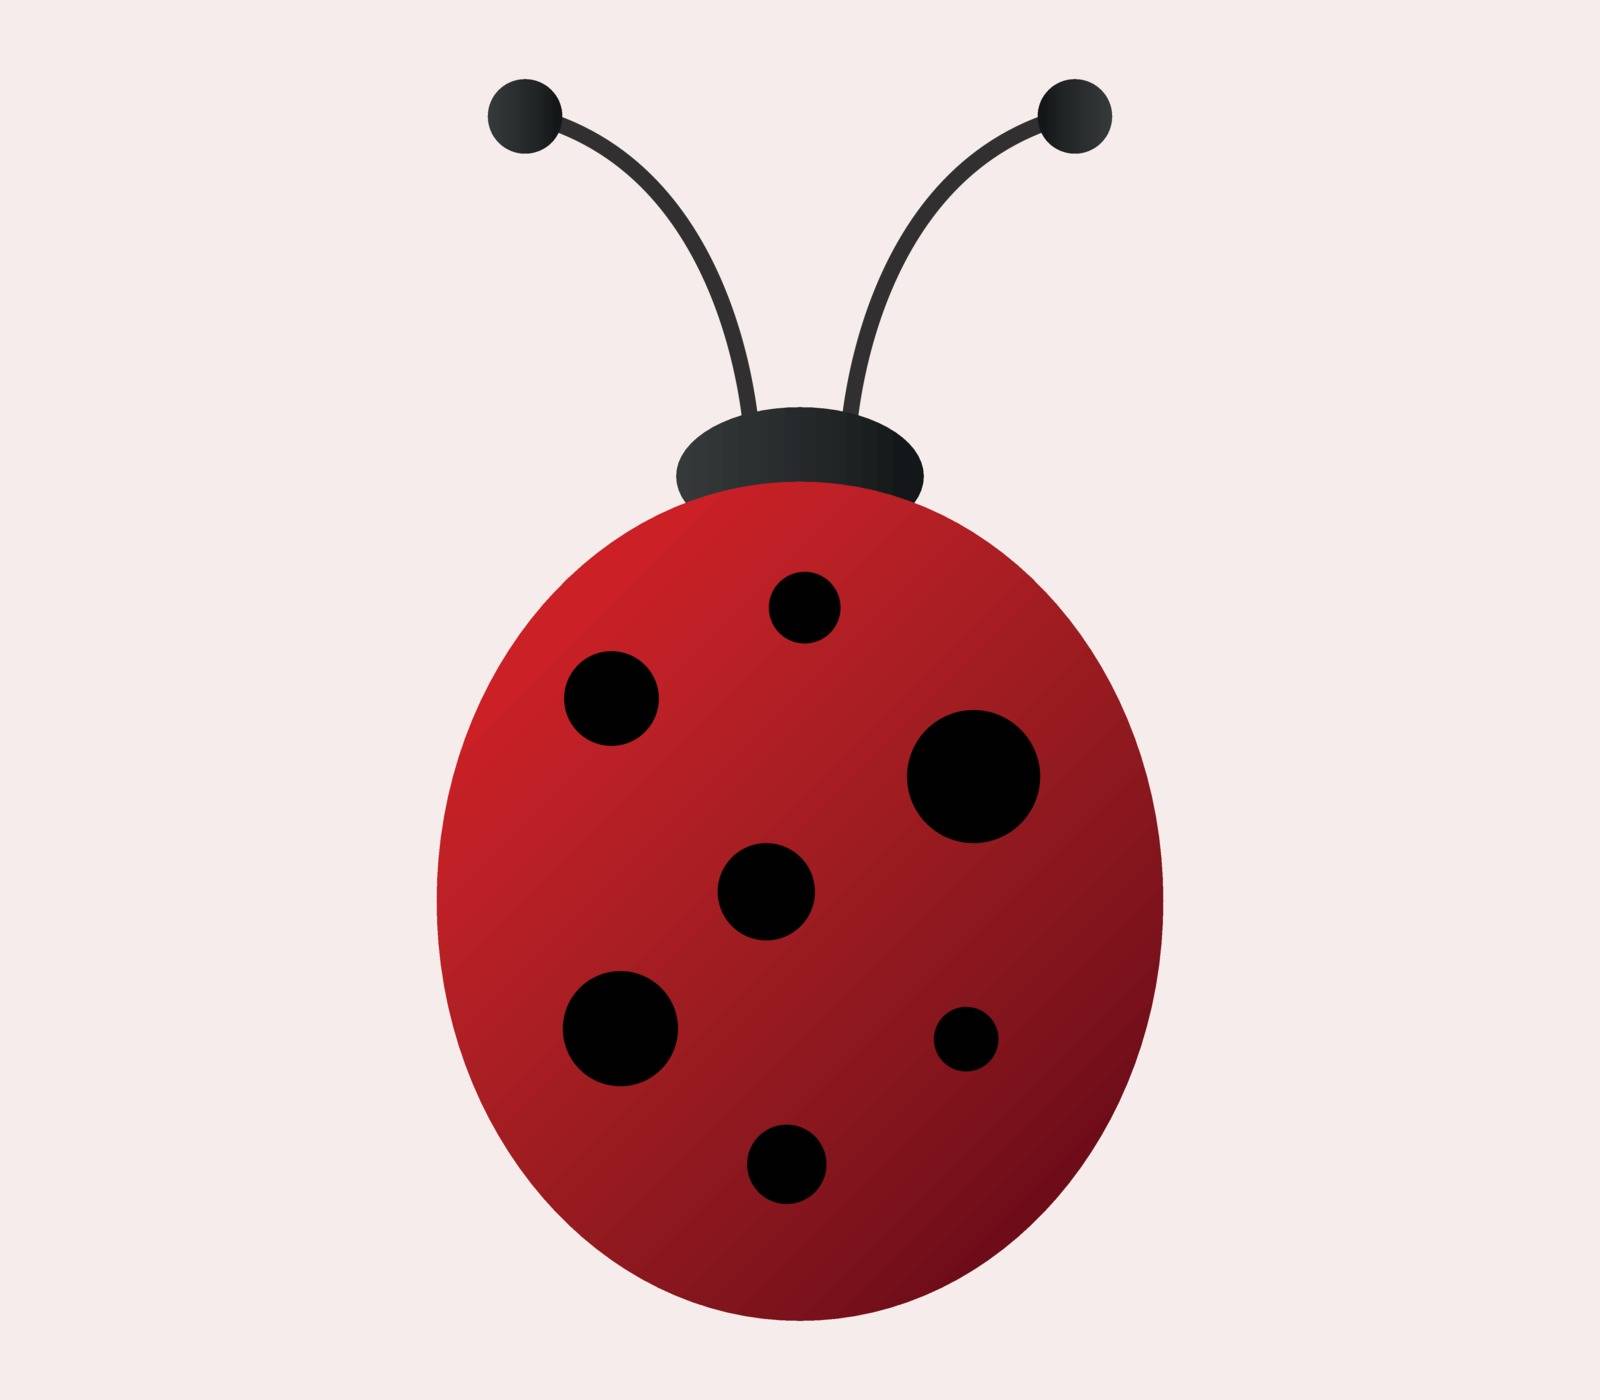 ladybird icon